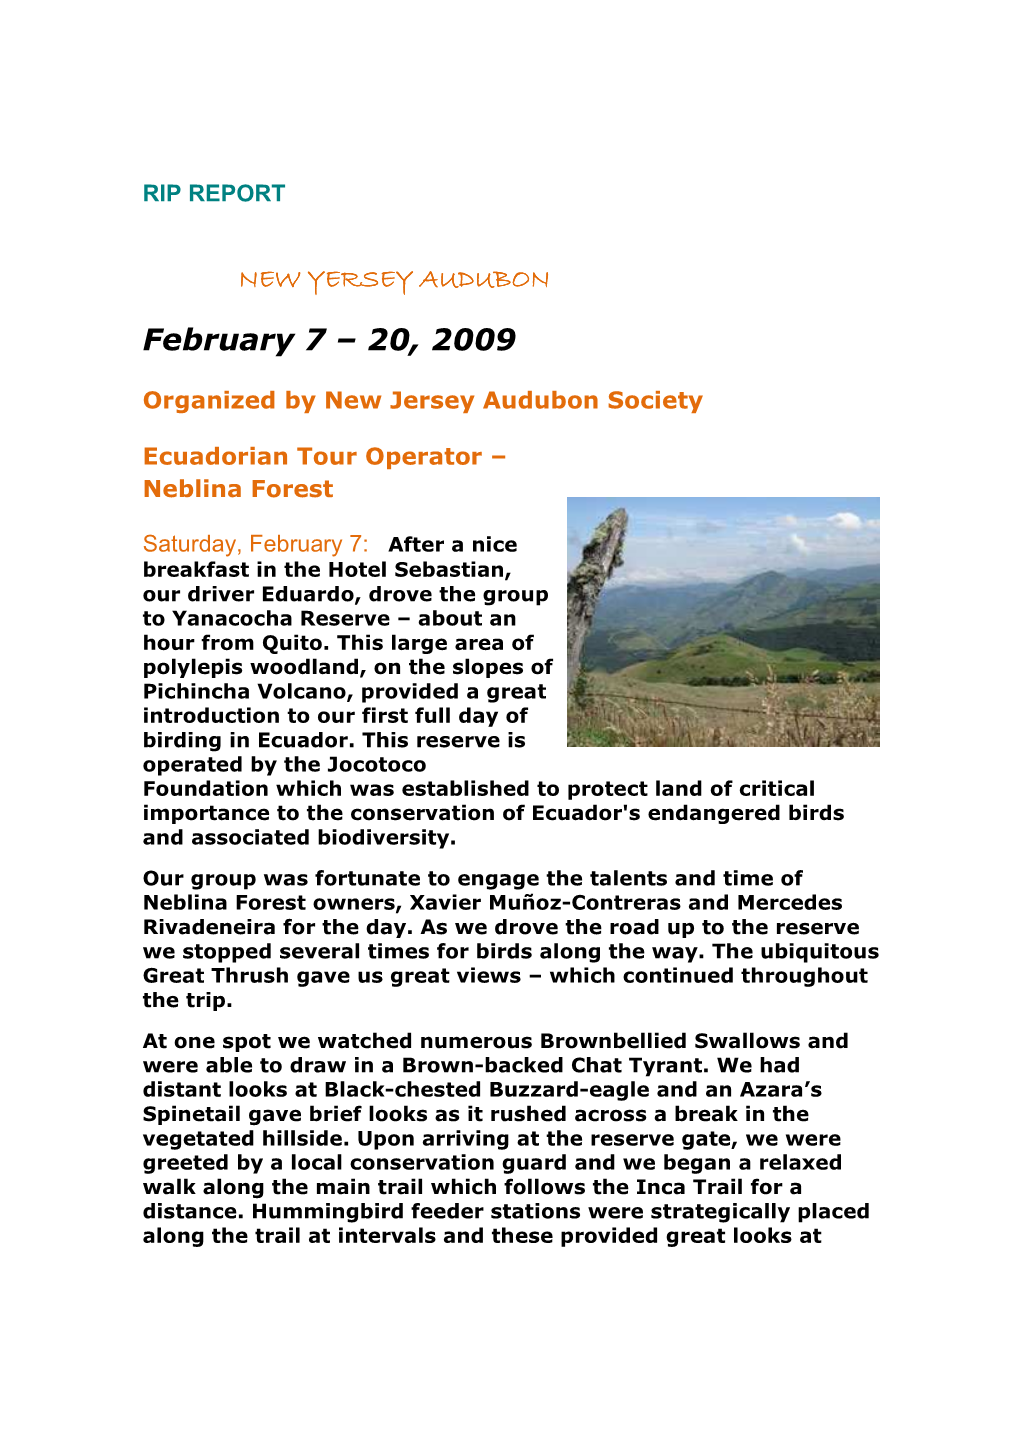 New Yersey Audubon Trip Report